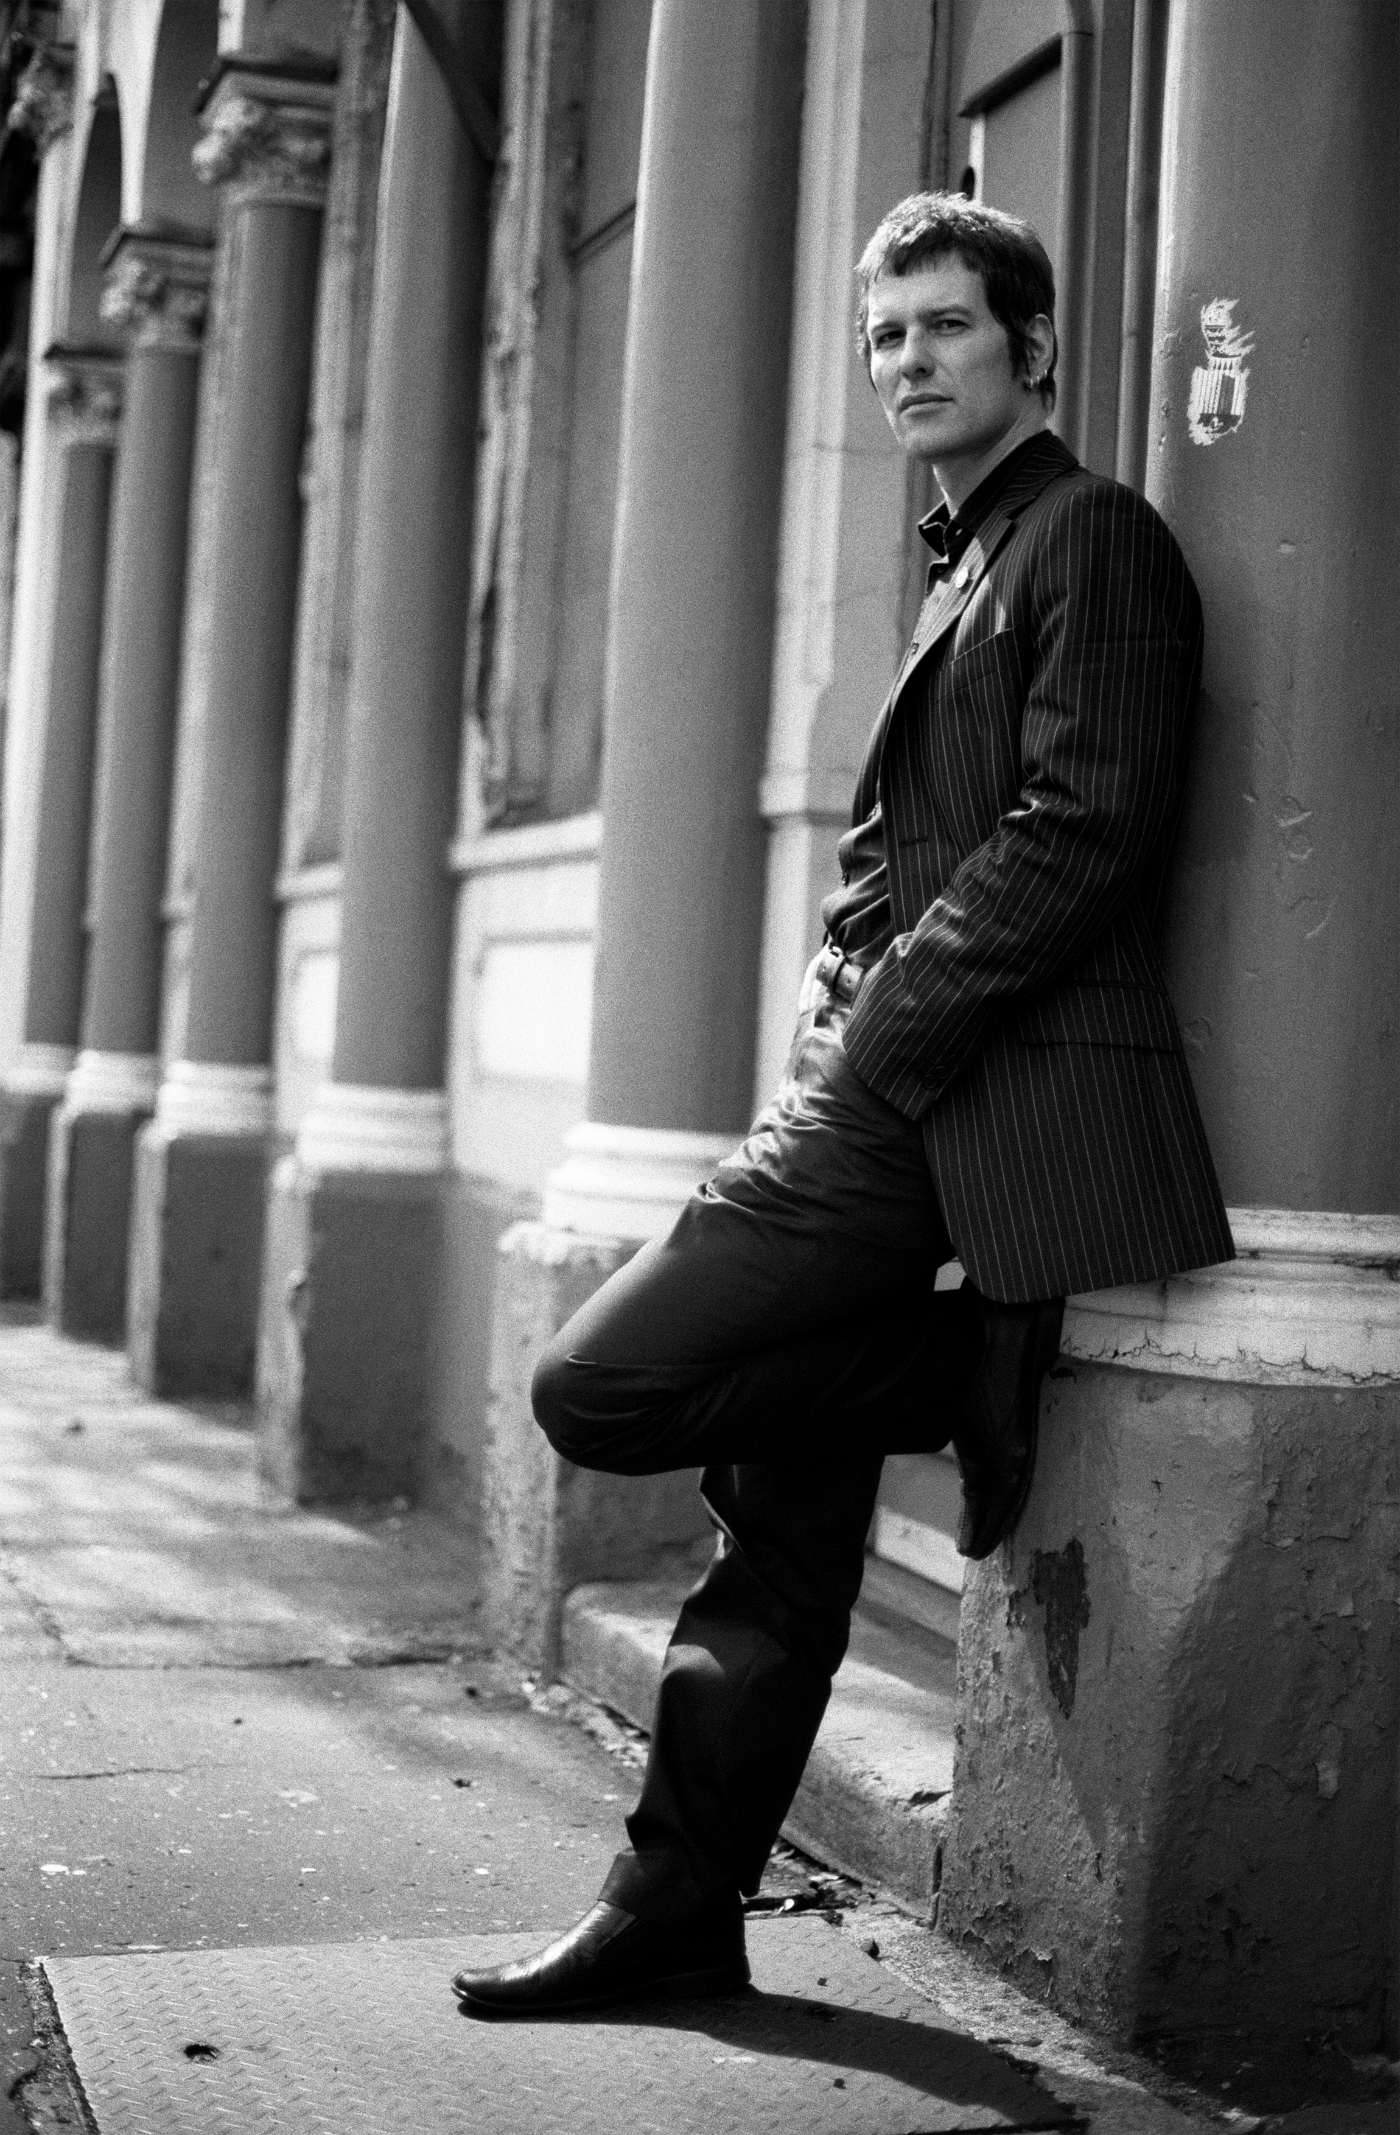 Andy Clarke portrait by Patrick Lauke, Manchester, 2006